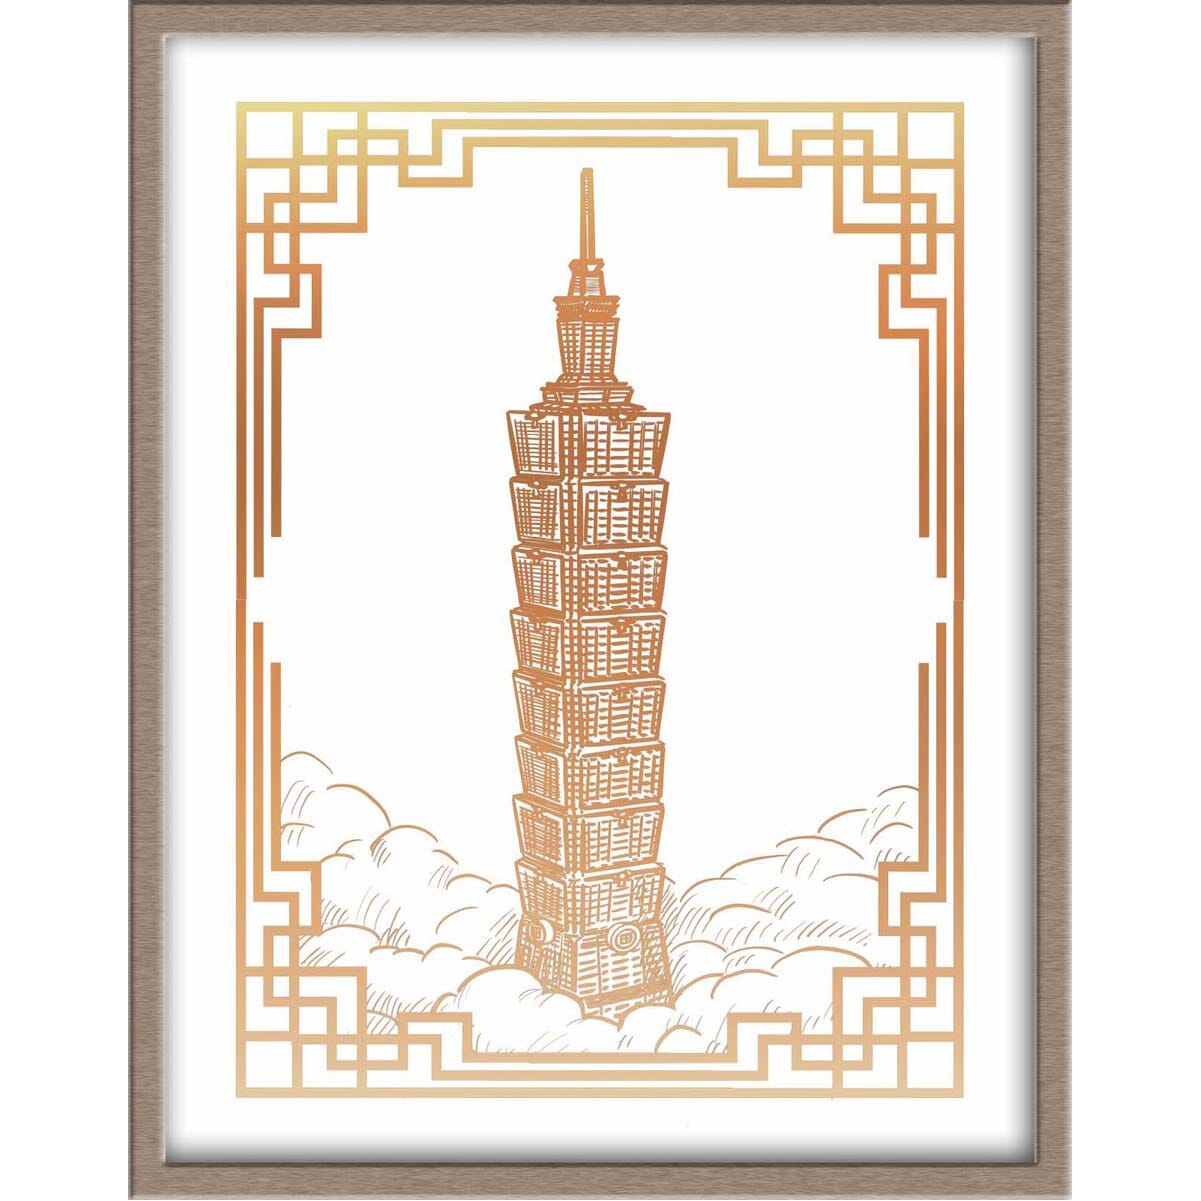 Taipei 101 Landmark Foiled Print Posters, Prints, & Visual Artwork JoyousJoyfulJoyness 